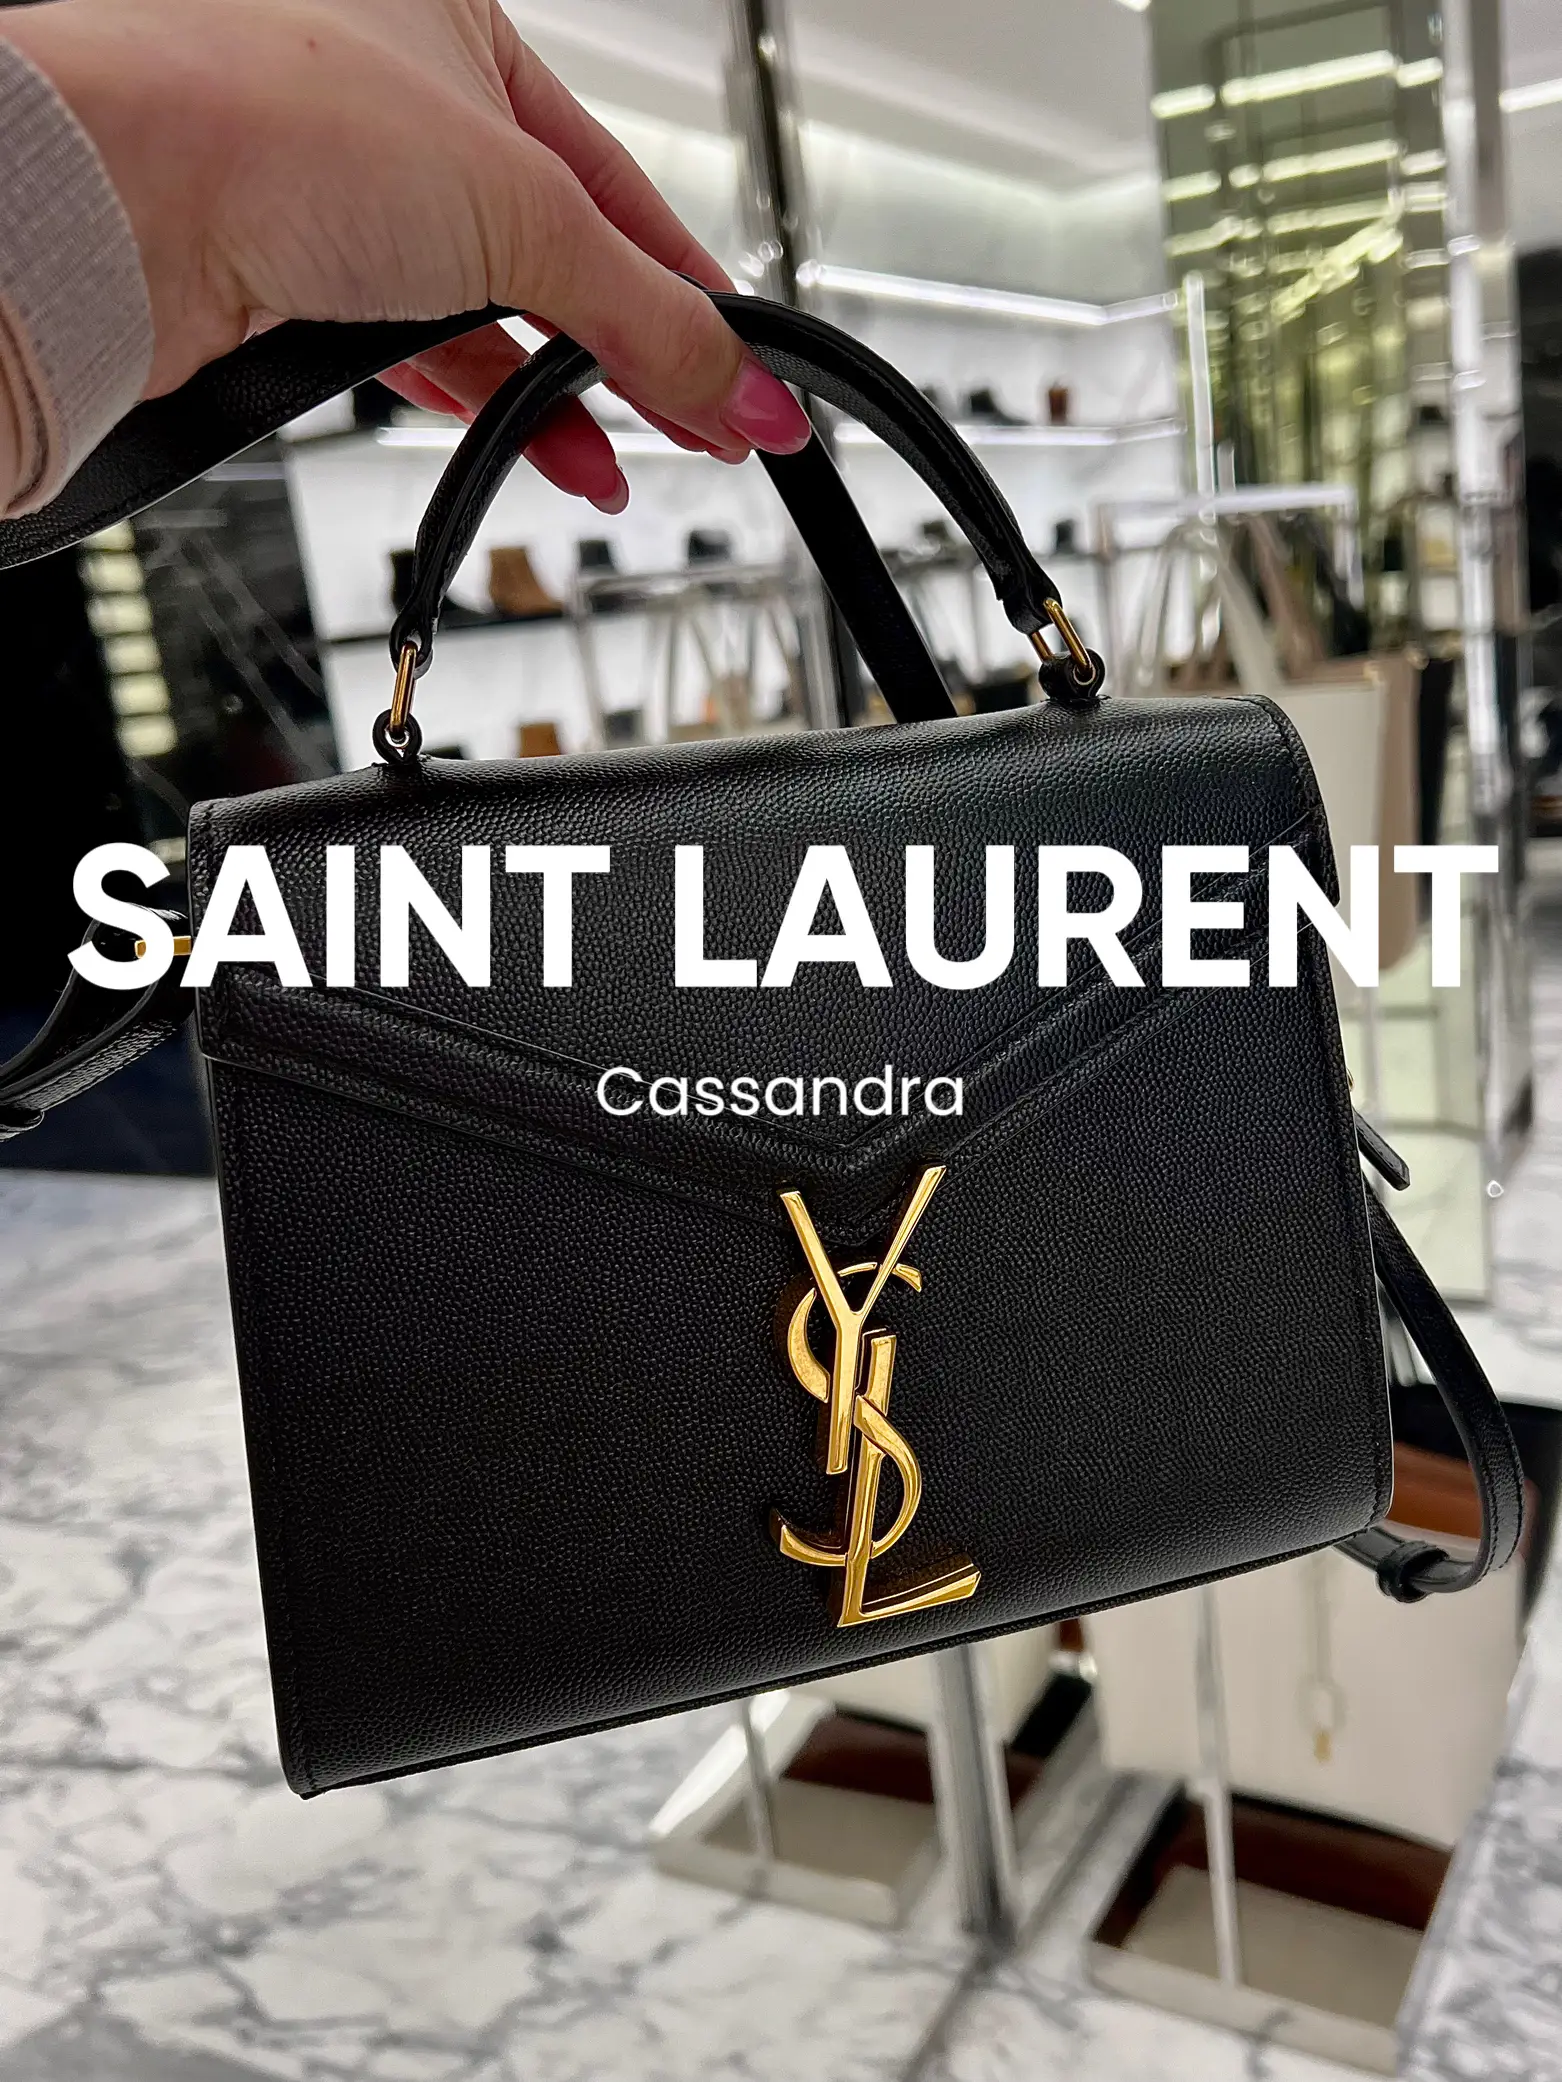 Yves Saint Laurent, Bags, Limited Edition Ysl Classic Medium